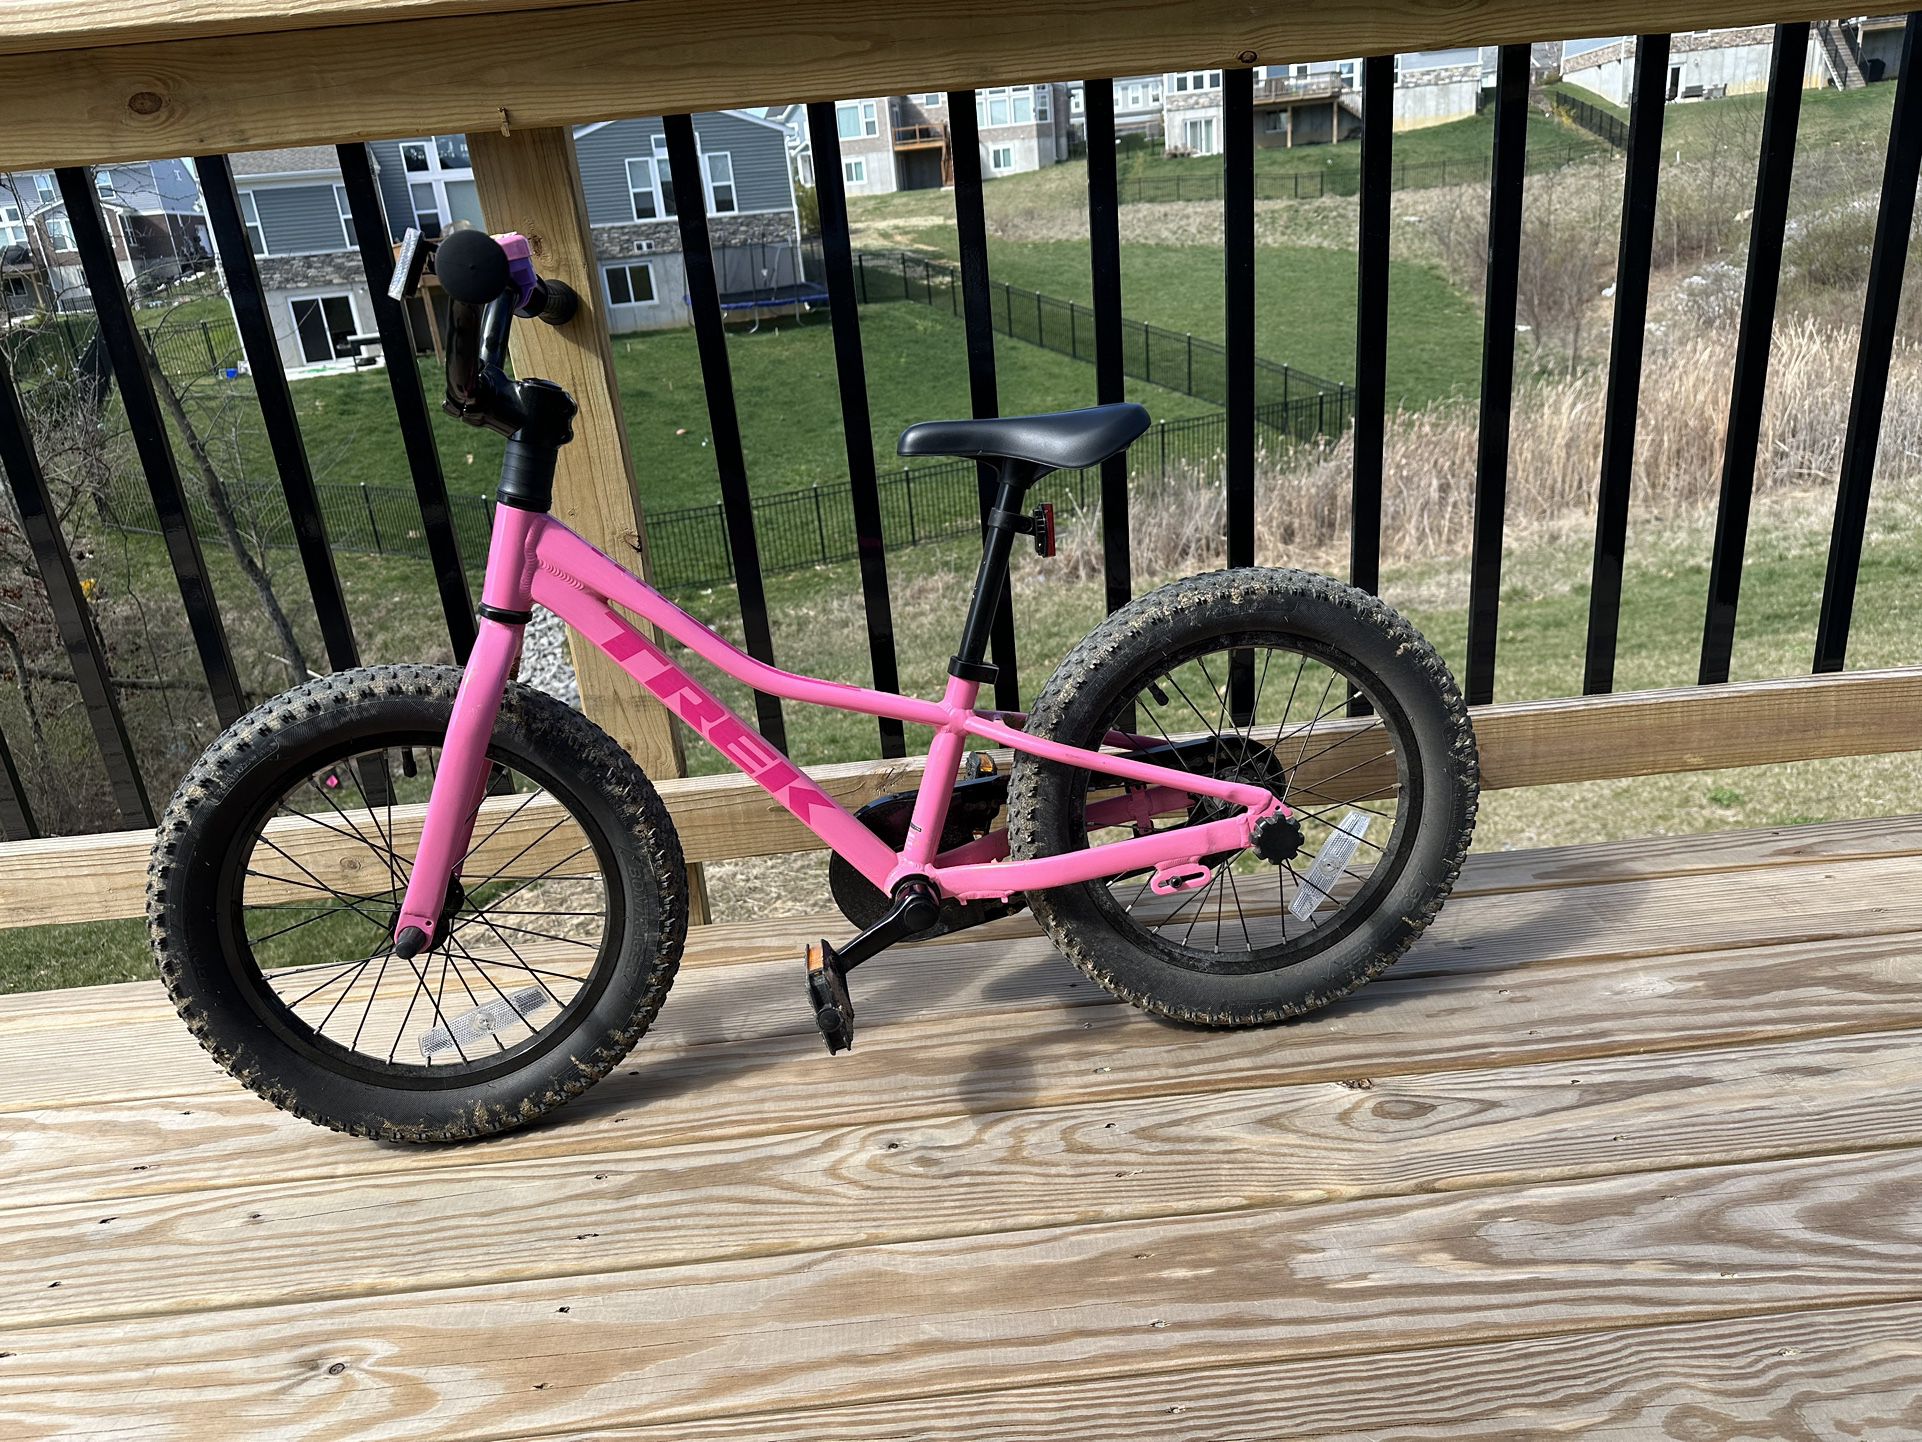 Trek Precaliber 16 Kids' Bike - Pink, Excellent Condi (for sale)